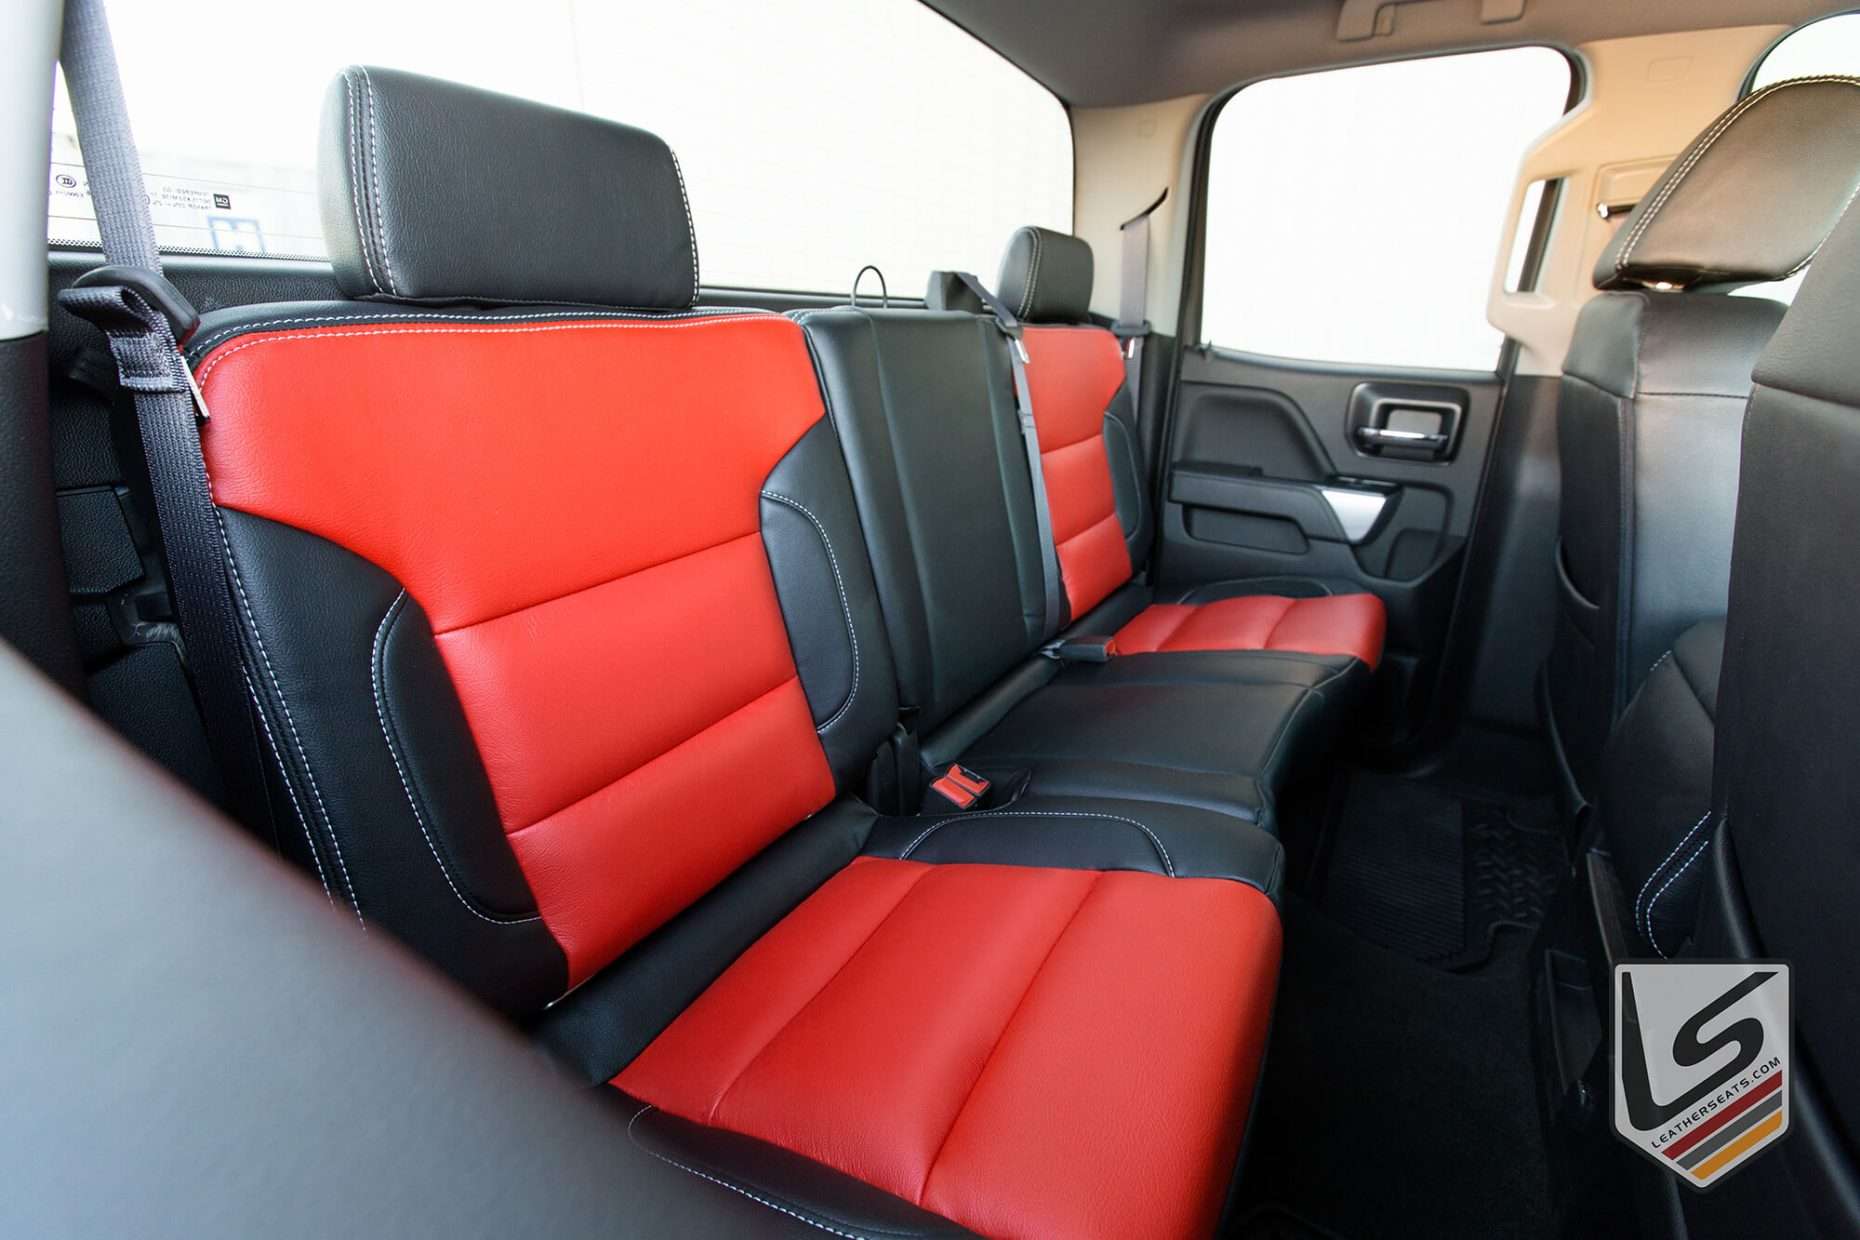 2014-2018 Chevrolet Silverado custom leather seats - Black with Bright Red Body - Rear seats